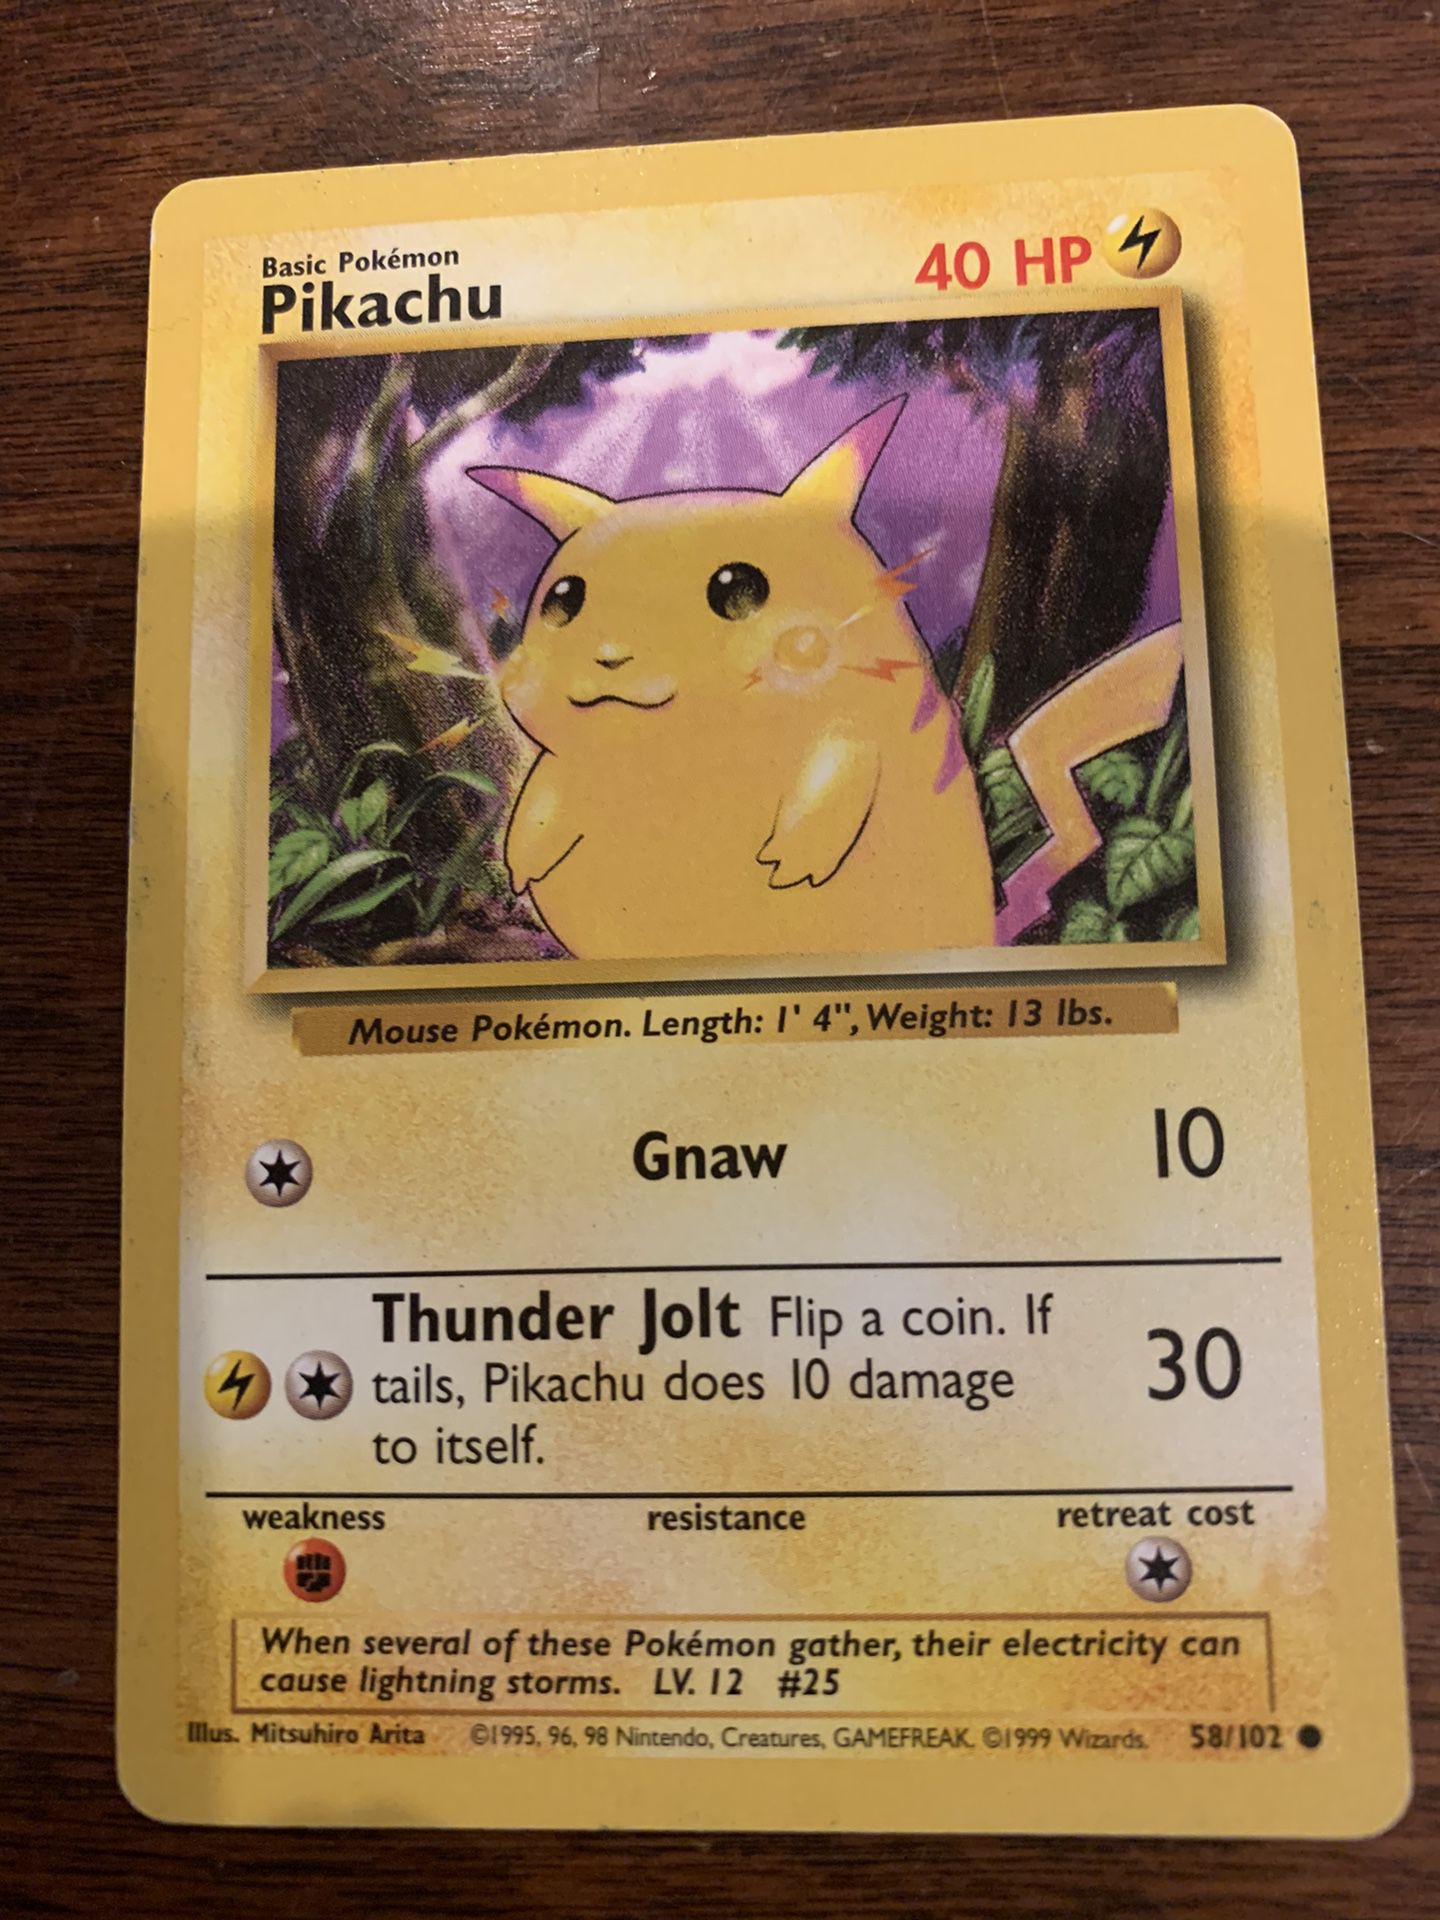 1998 Pikachu Pokemon Card! Excellent condition.